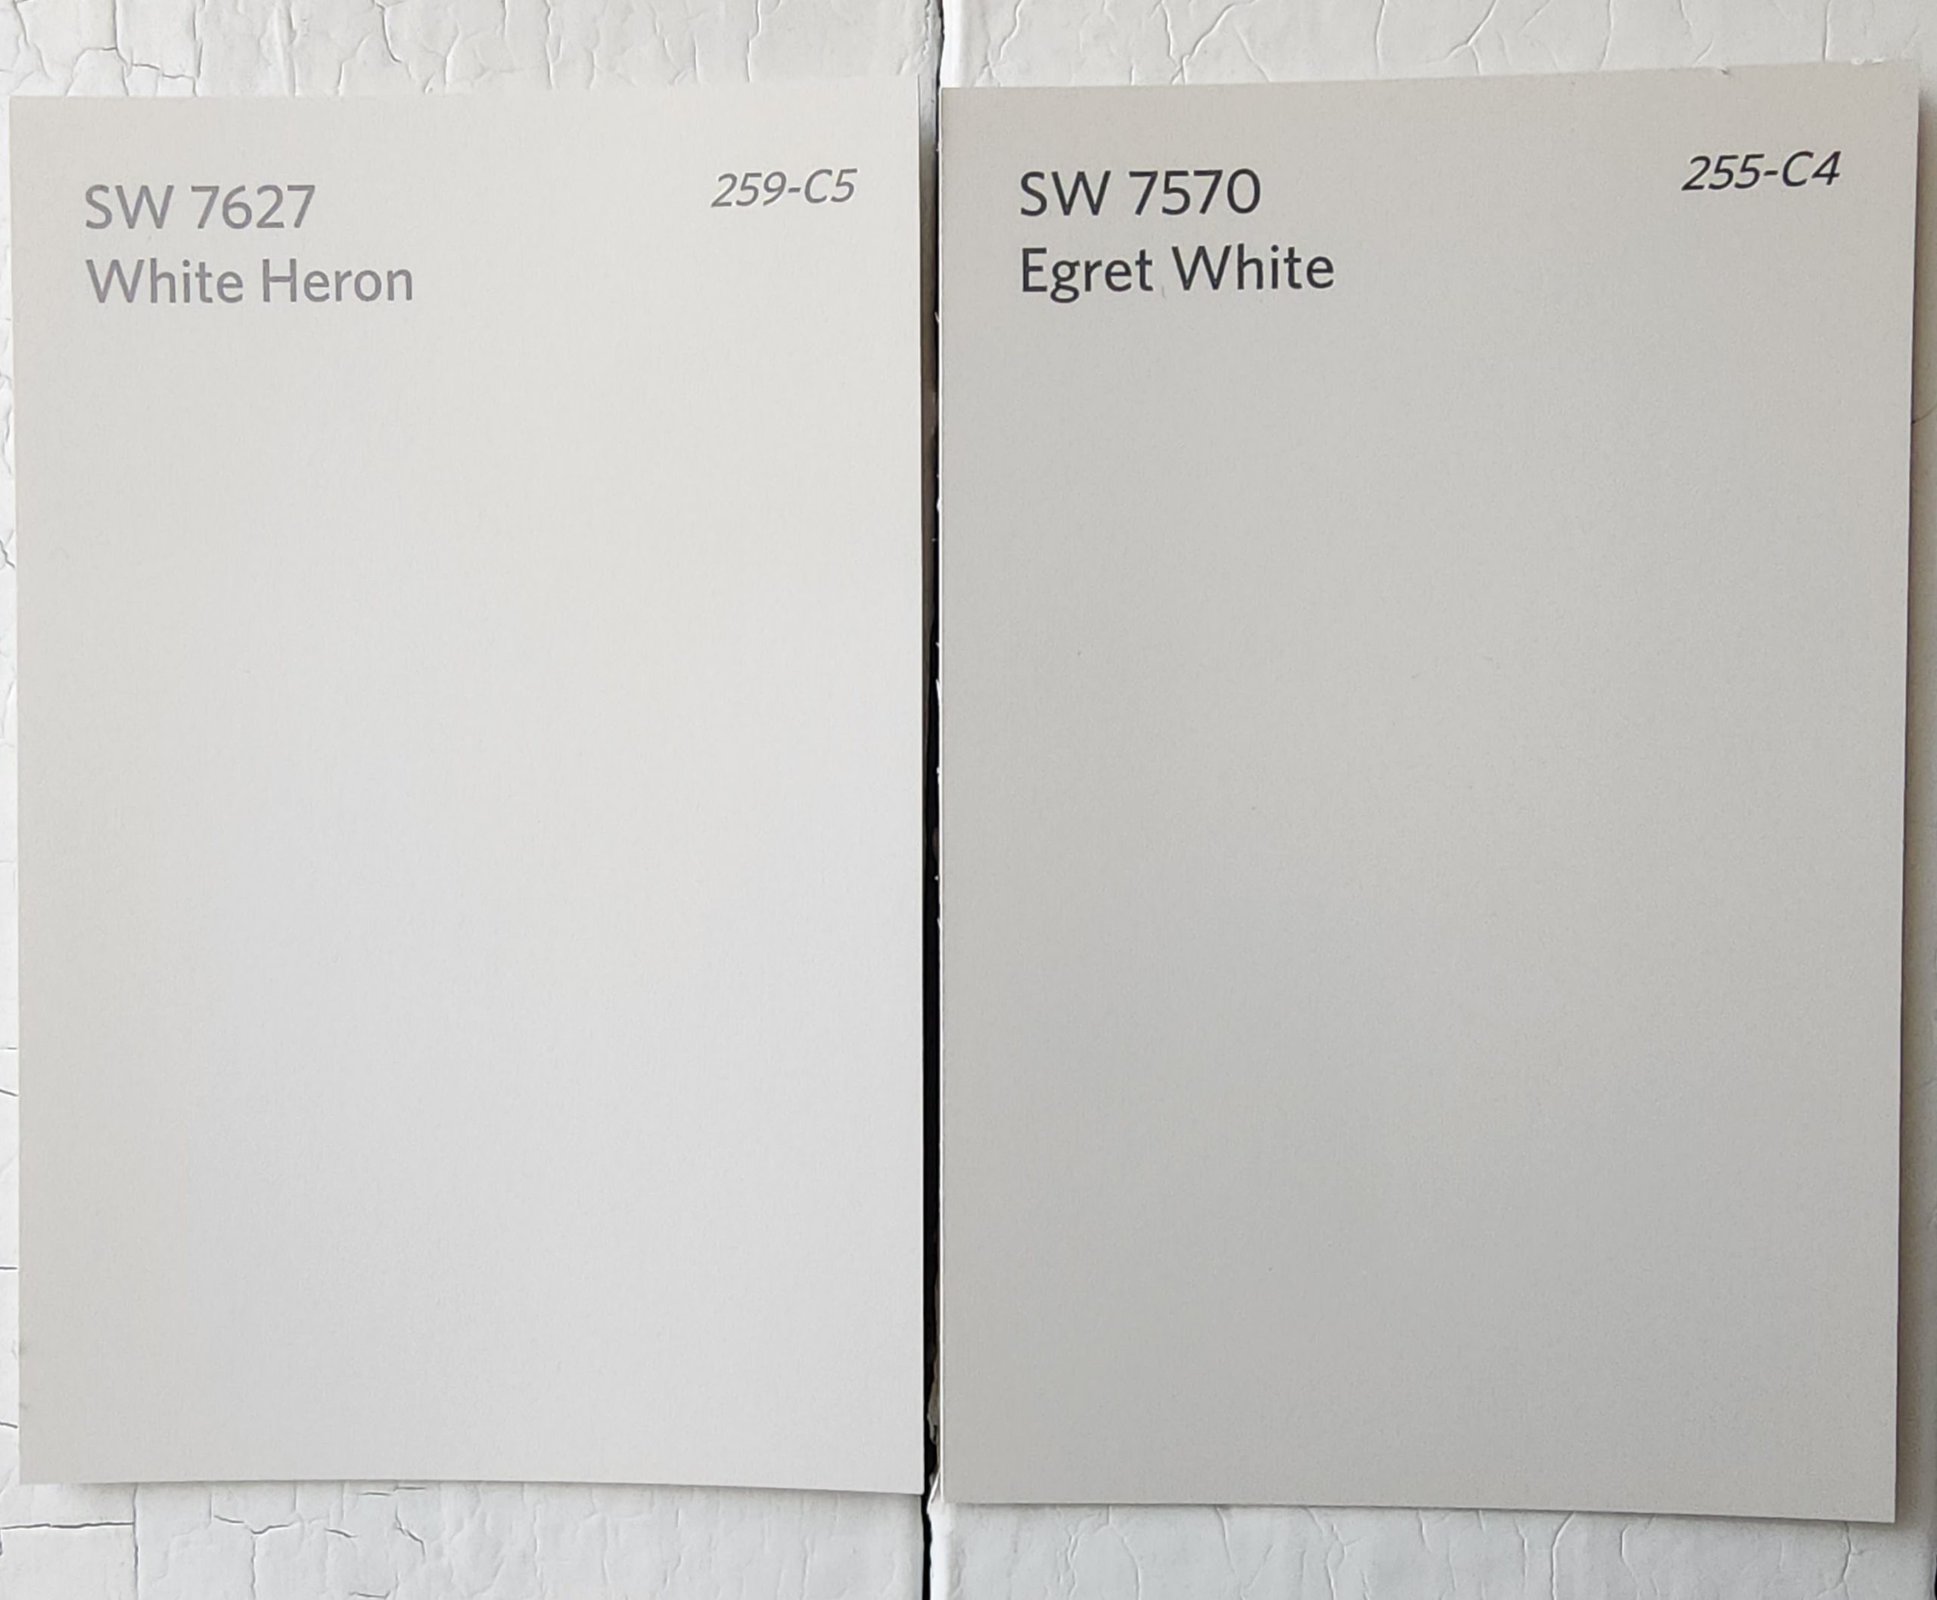  White Heron vs Egret White by Sherwin Williams scaled